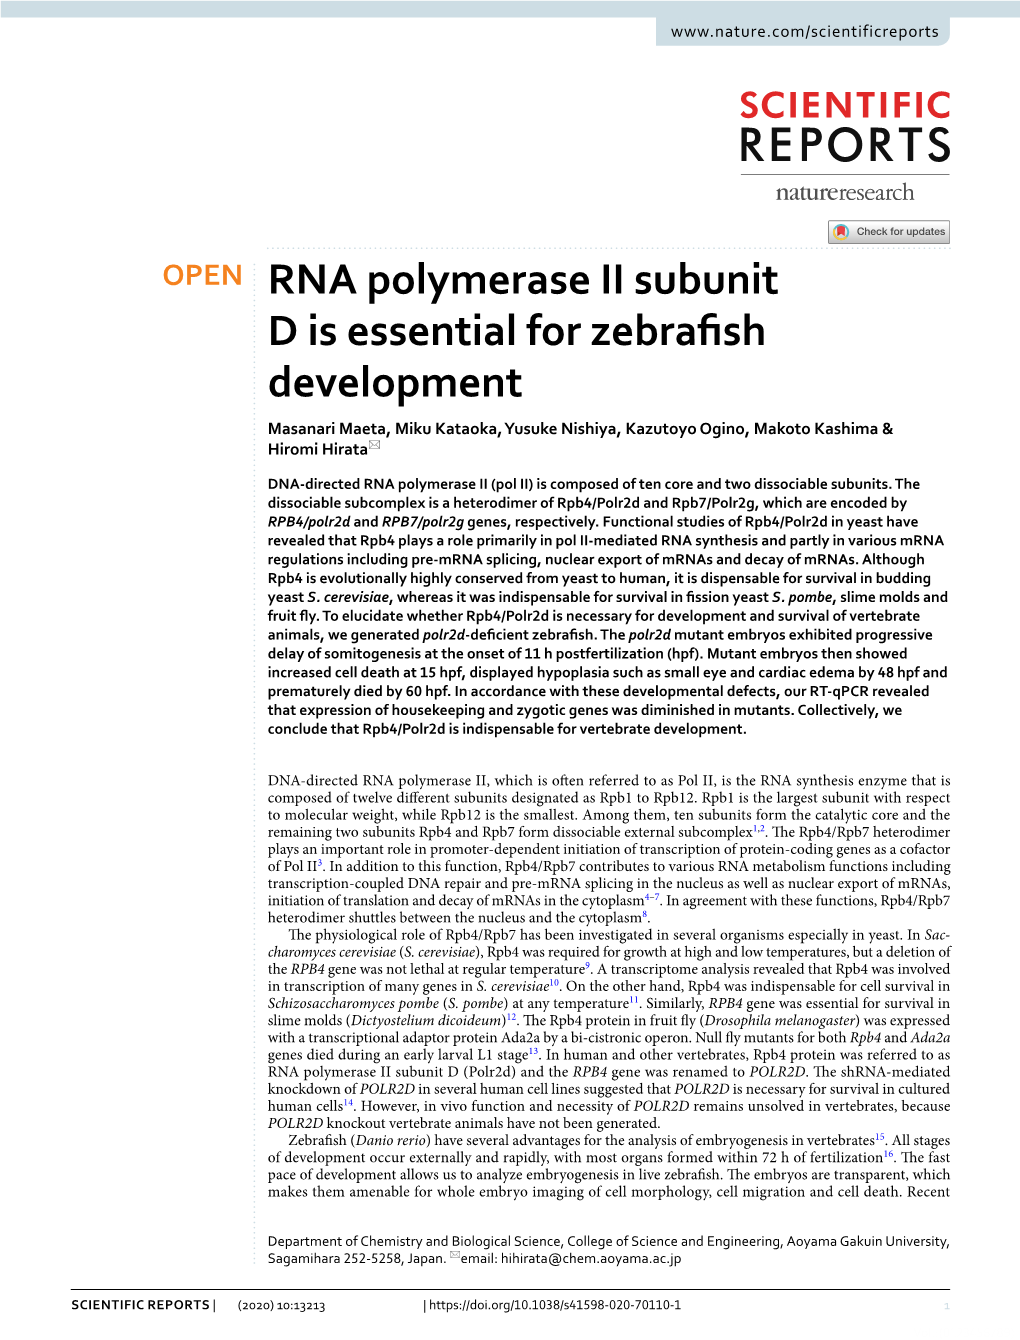 RNA Polymerase II Subunit D Is Essential for Zebrafish Development